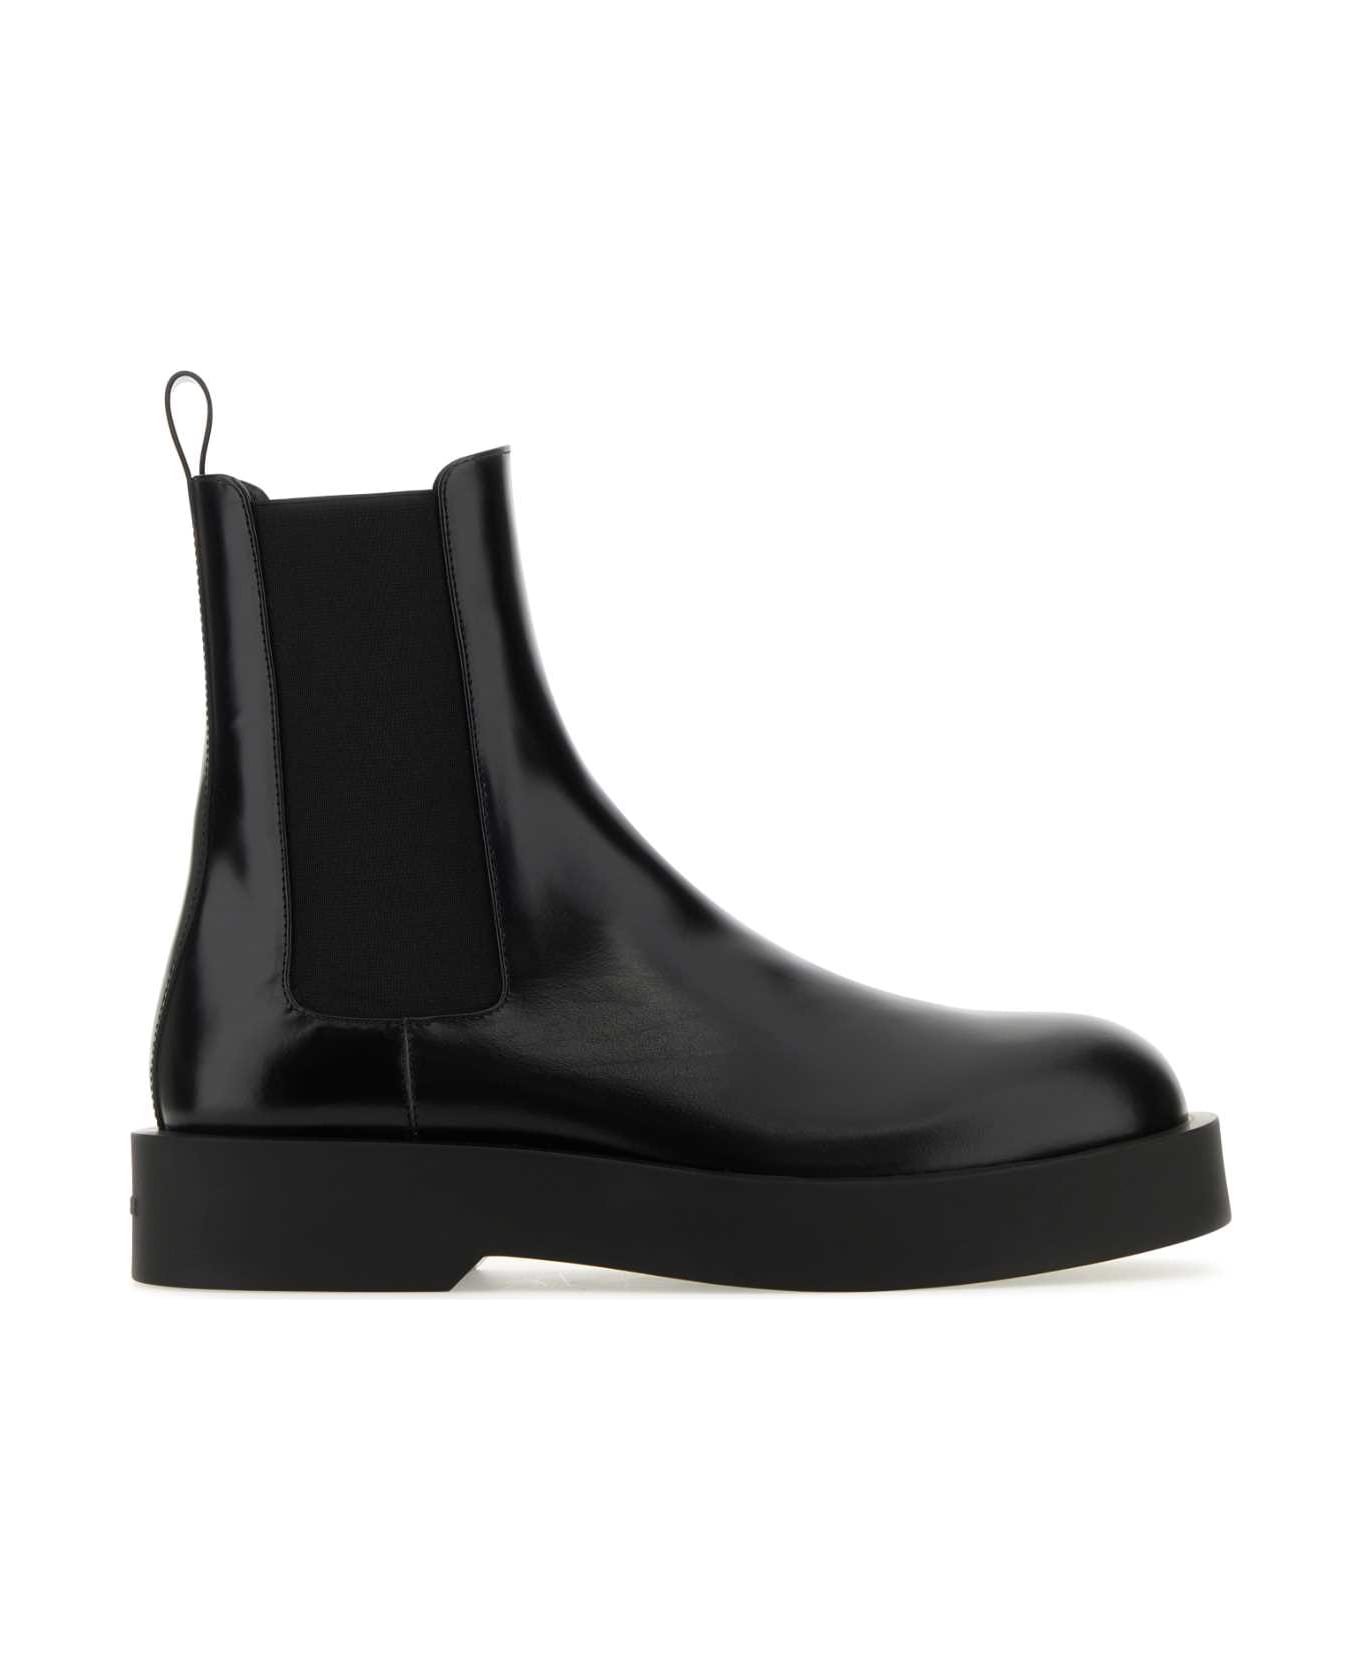 Jil Sander Black Leather Ankle Boots - 001 ブーツ